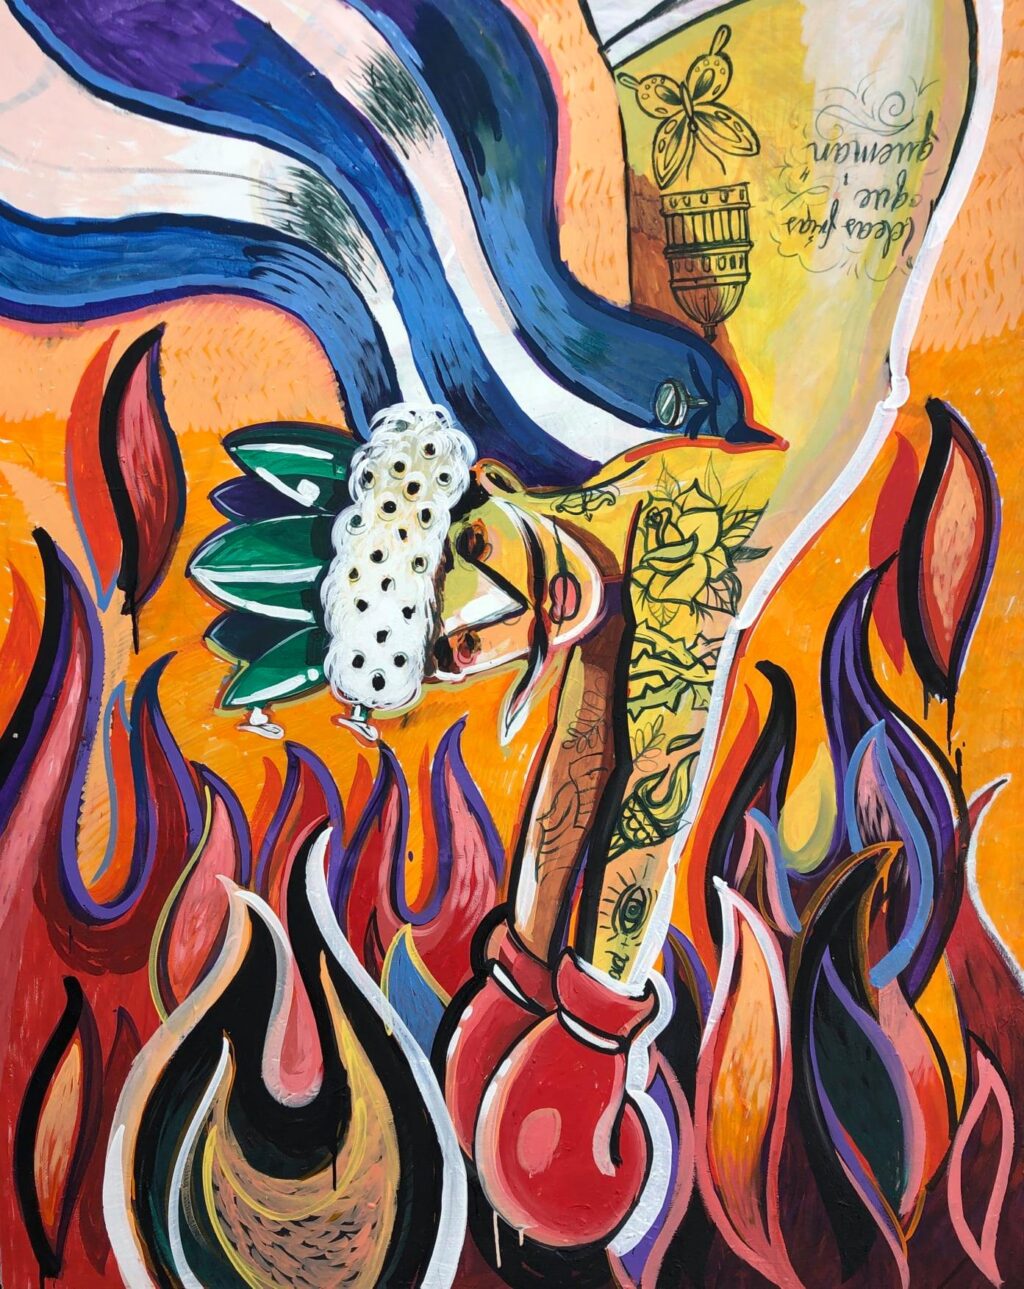 Marco Arturo Herrera - Pa’ la caliente 2020, Mixed on canvas, 170 x 140 cm